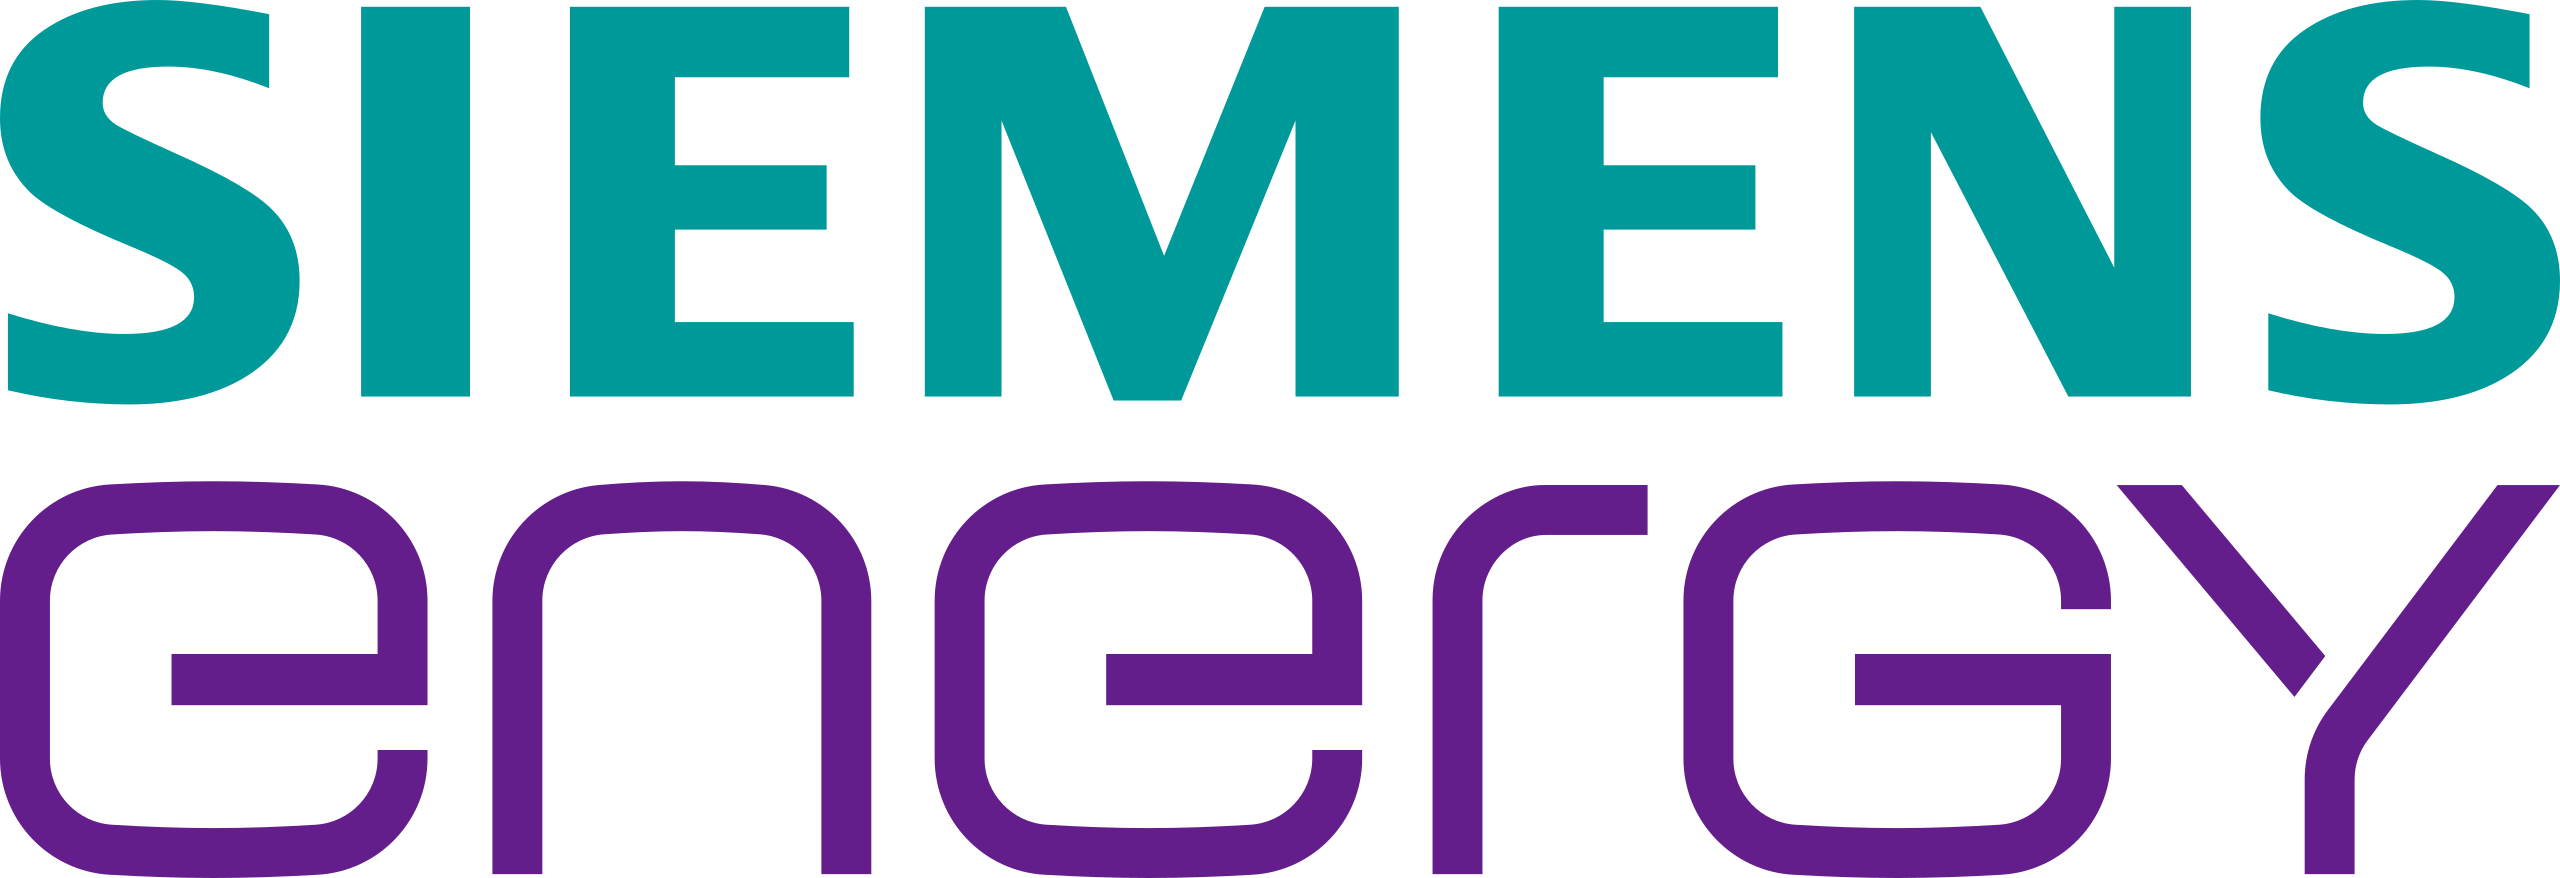 siemens logo vector